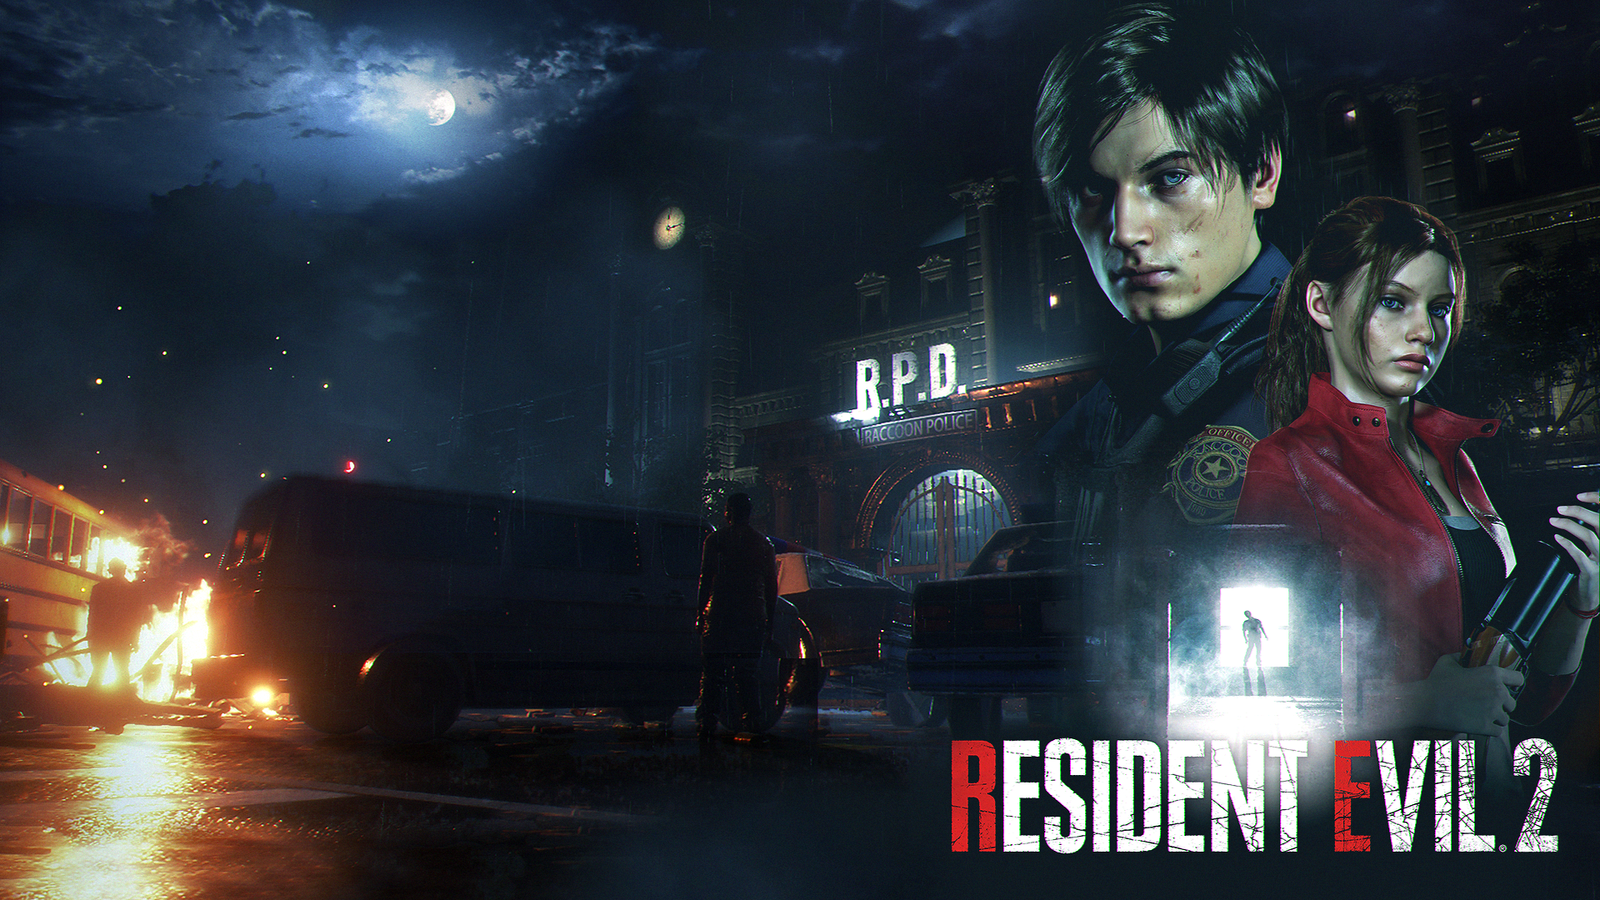 RESIDENT EVIL 2 REMAKE: BEAUTIFUL SCREENSHOTS - Resident evil, Resident Evil 2: Remake, Horror, Games, Screenshot, Longpost